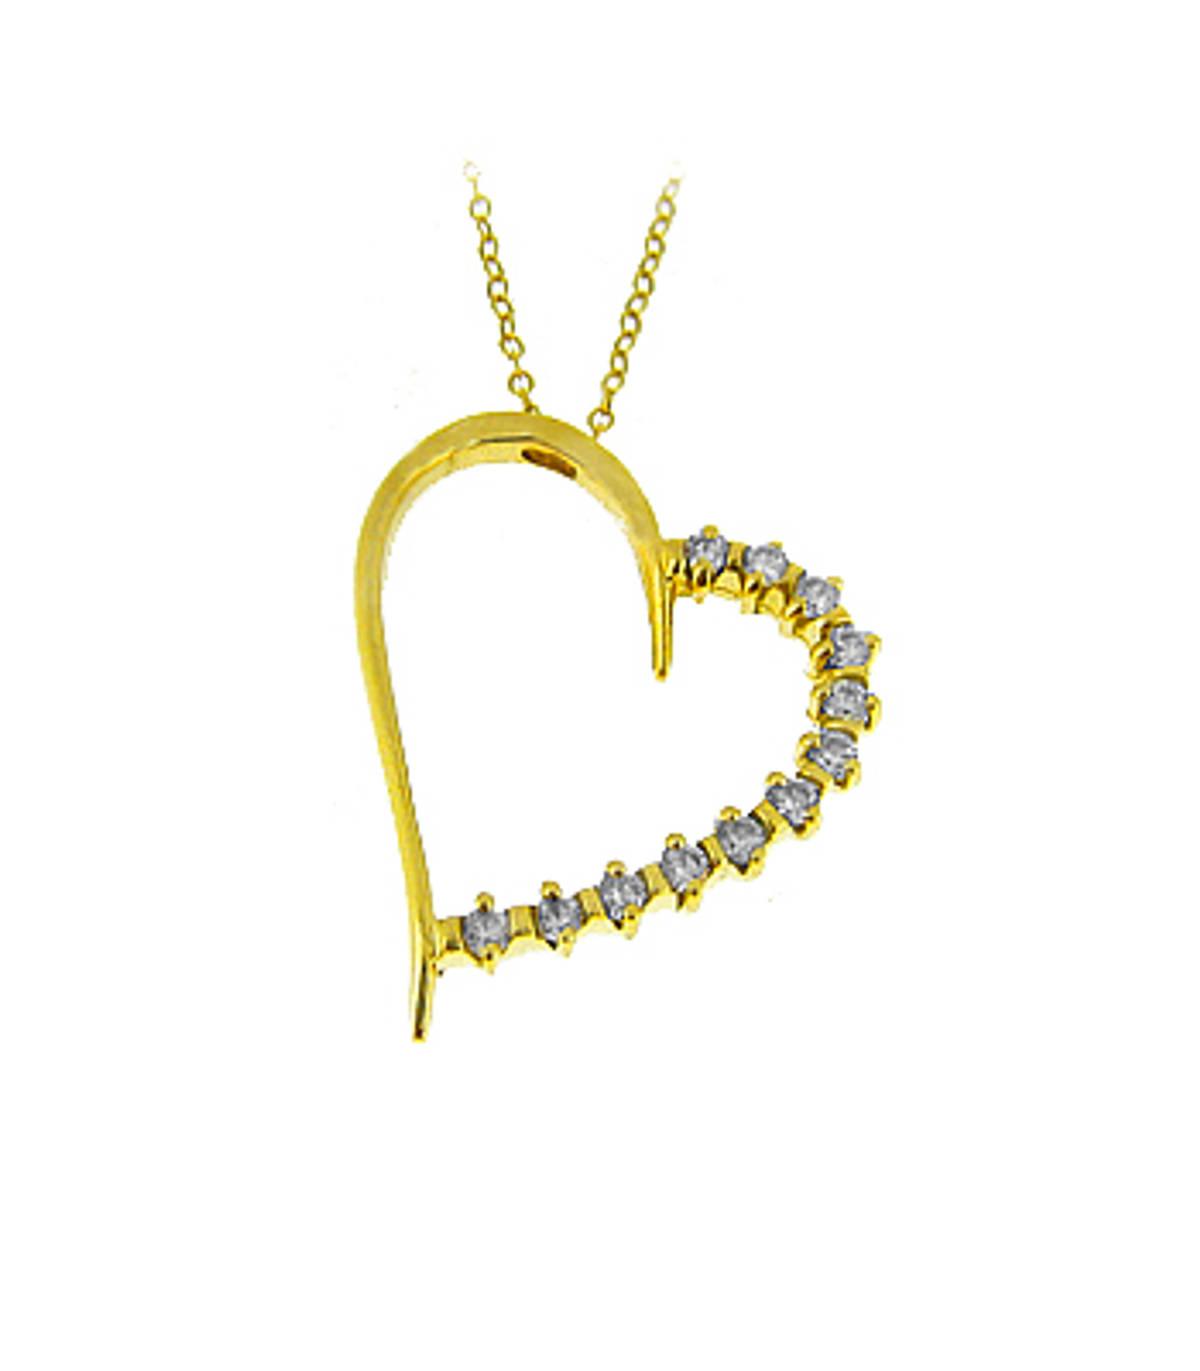 9k yellow gold open heart CZ pendant on 9k yellow gold 18” chain
9k yellow gold 18” chainMetal: 9k yellow gold
Length  2.9cm  Width  2.1cm Made in Ireland